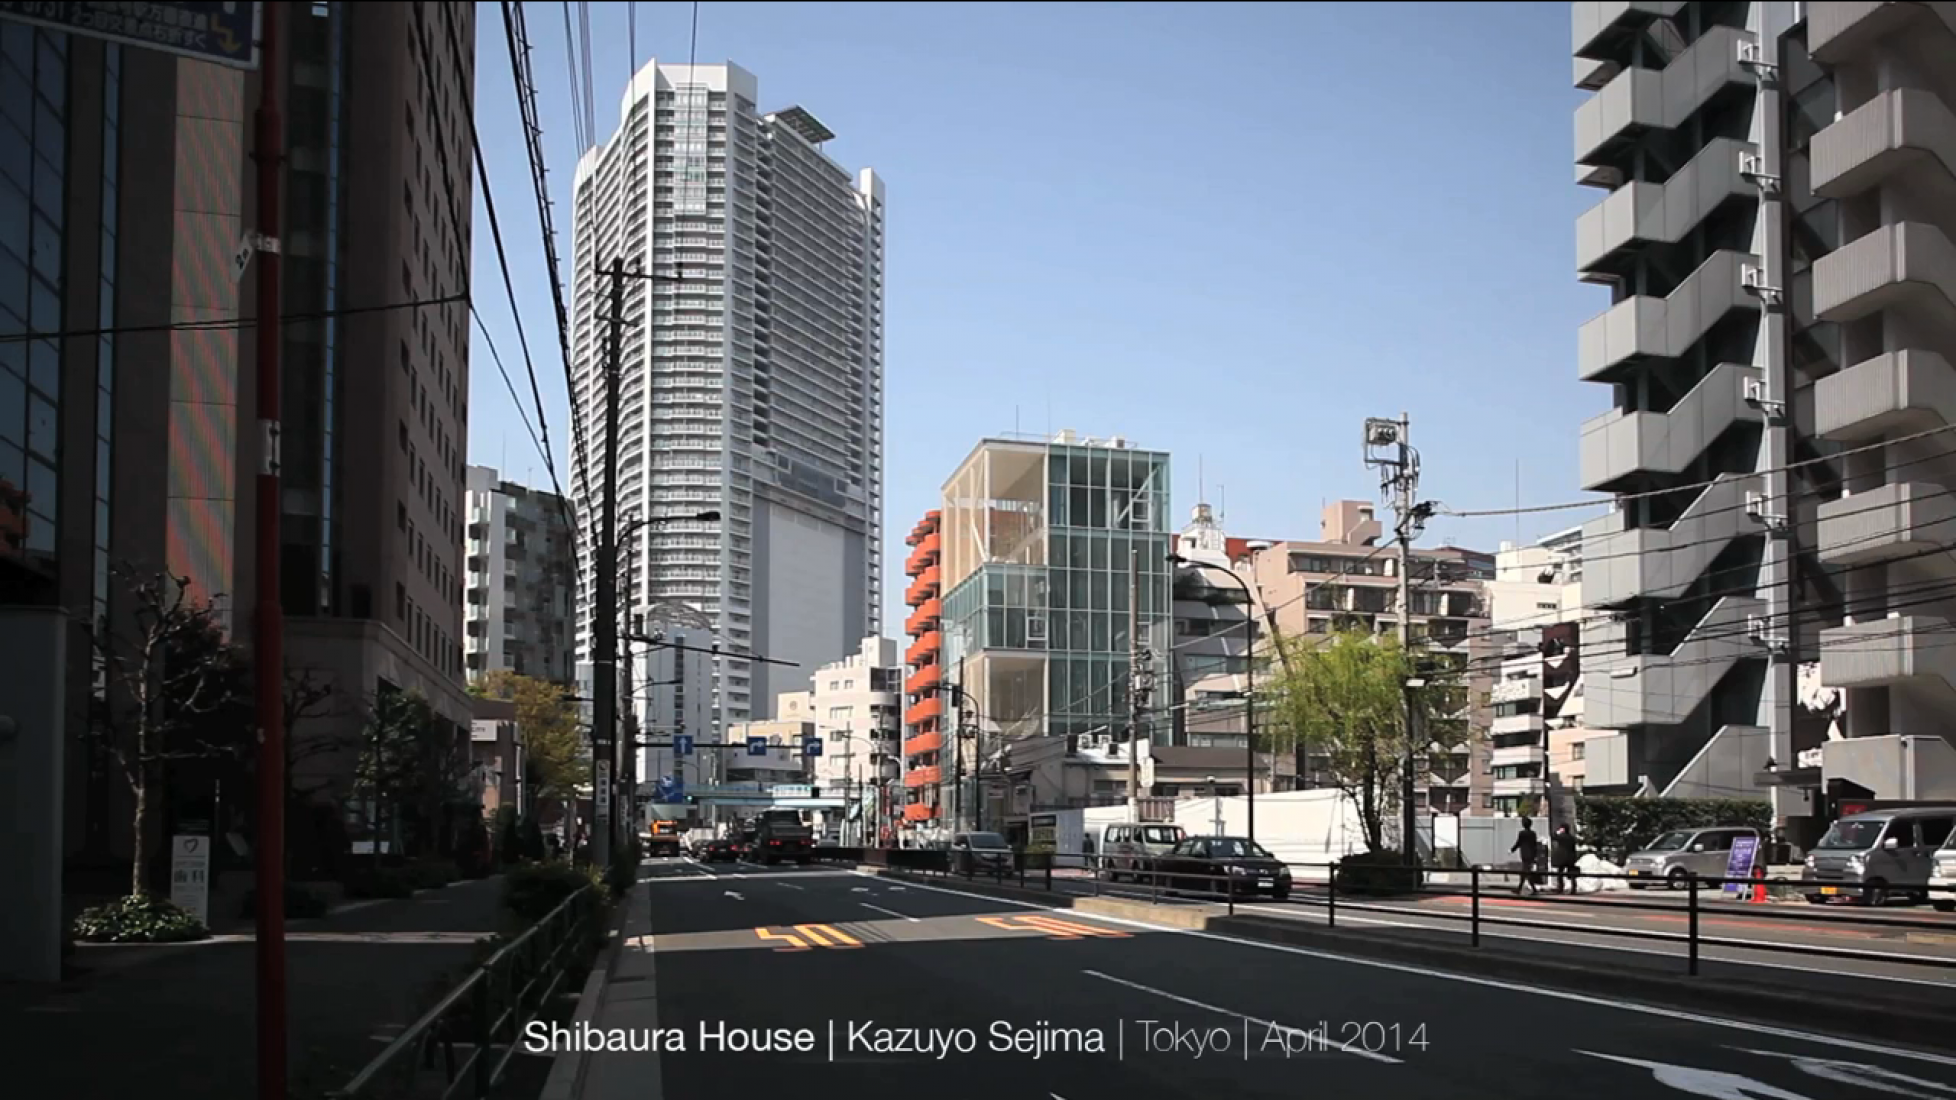 Edificio Shibaura por Kazuyo Sejima. Vídeo por Vincent Hecht.